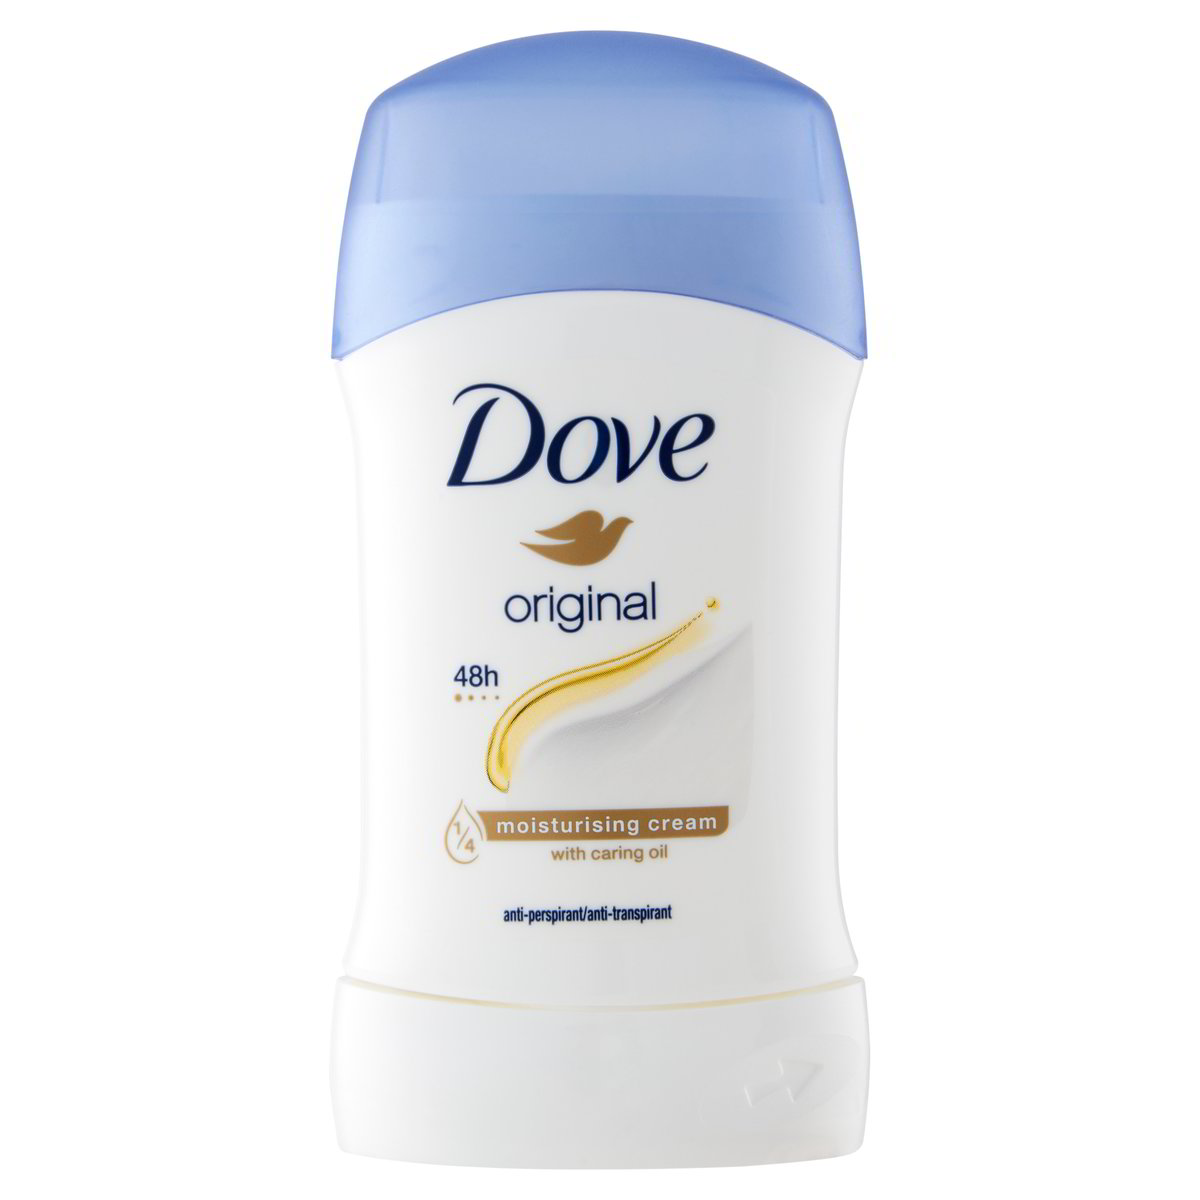 Dove Deodorante stick Original